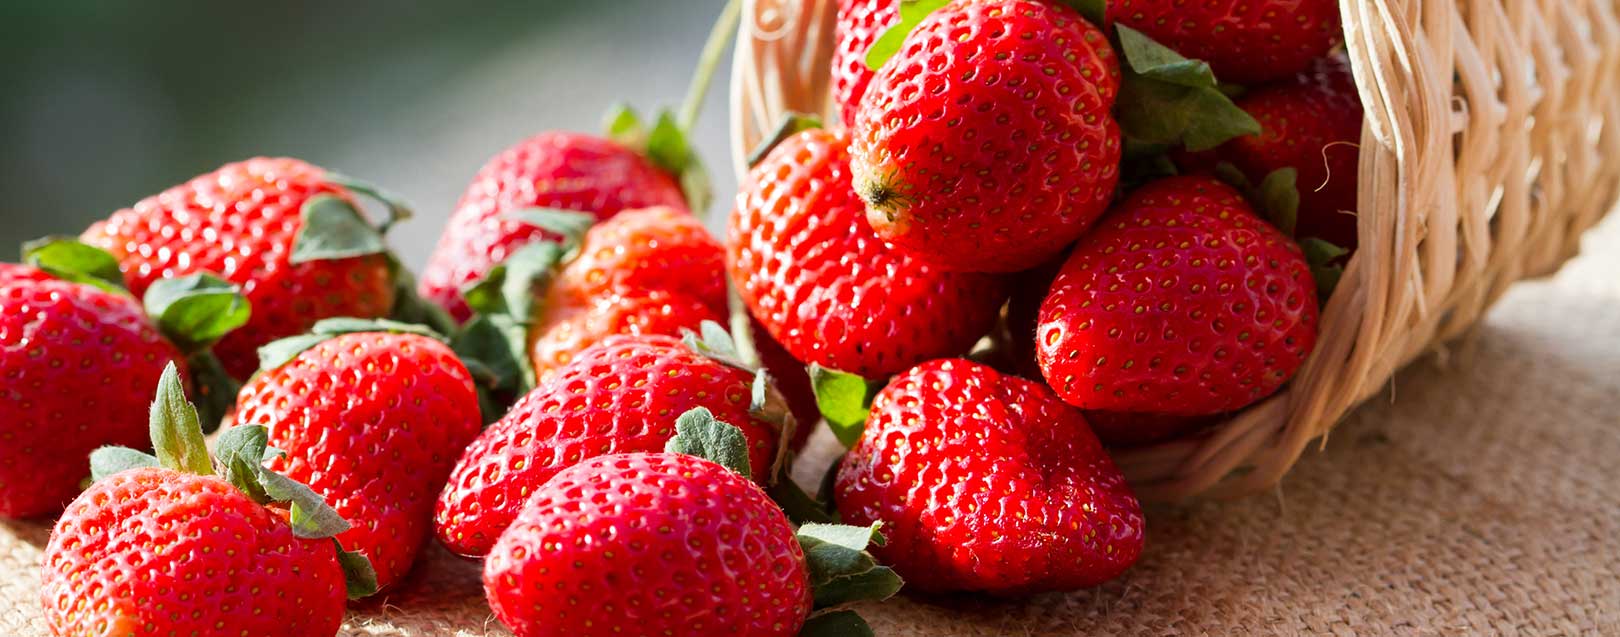 Saudi Arabia bans Egyptian strawberries due to pesticide residues